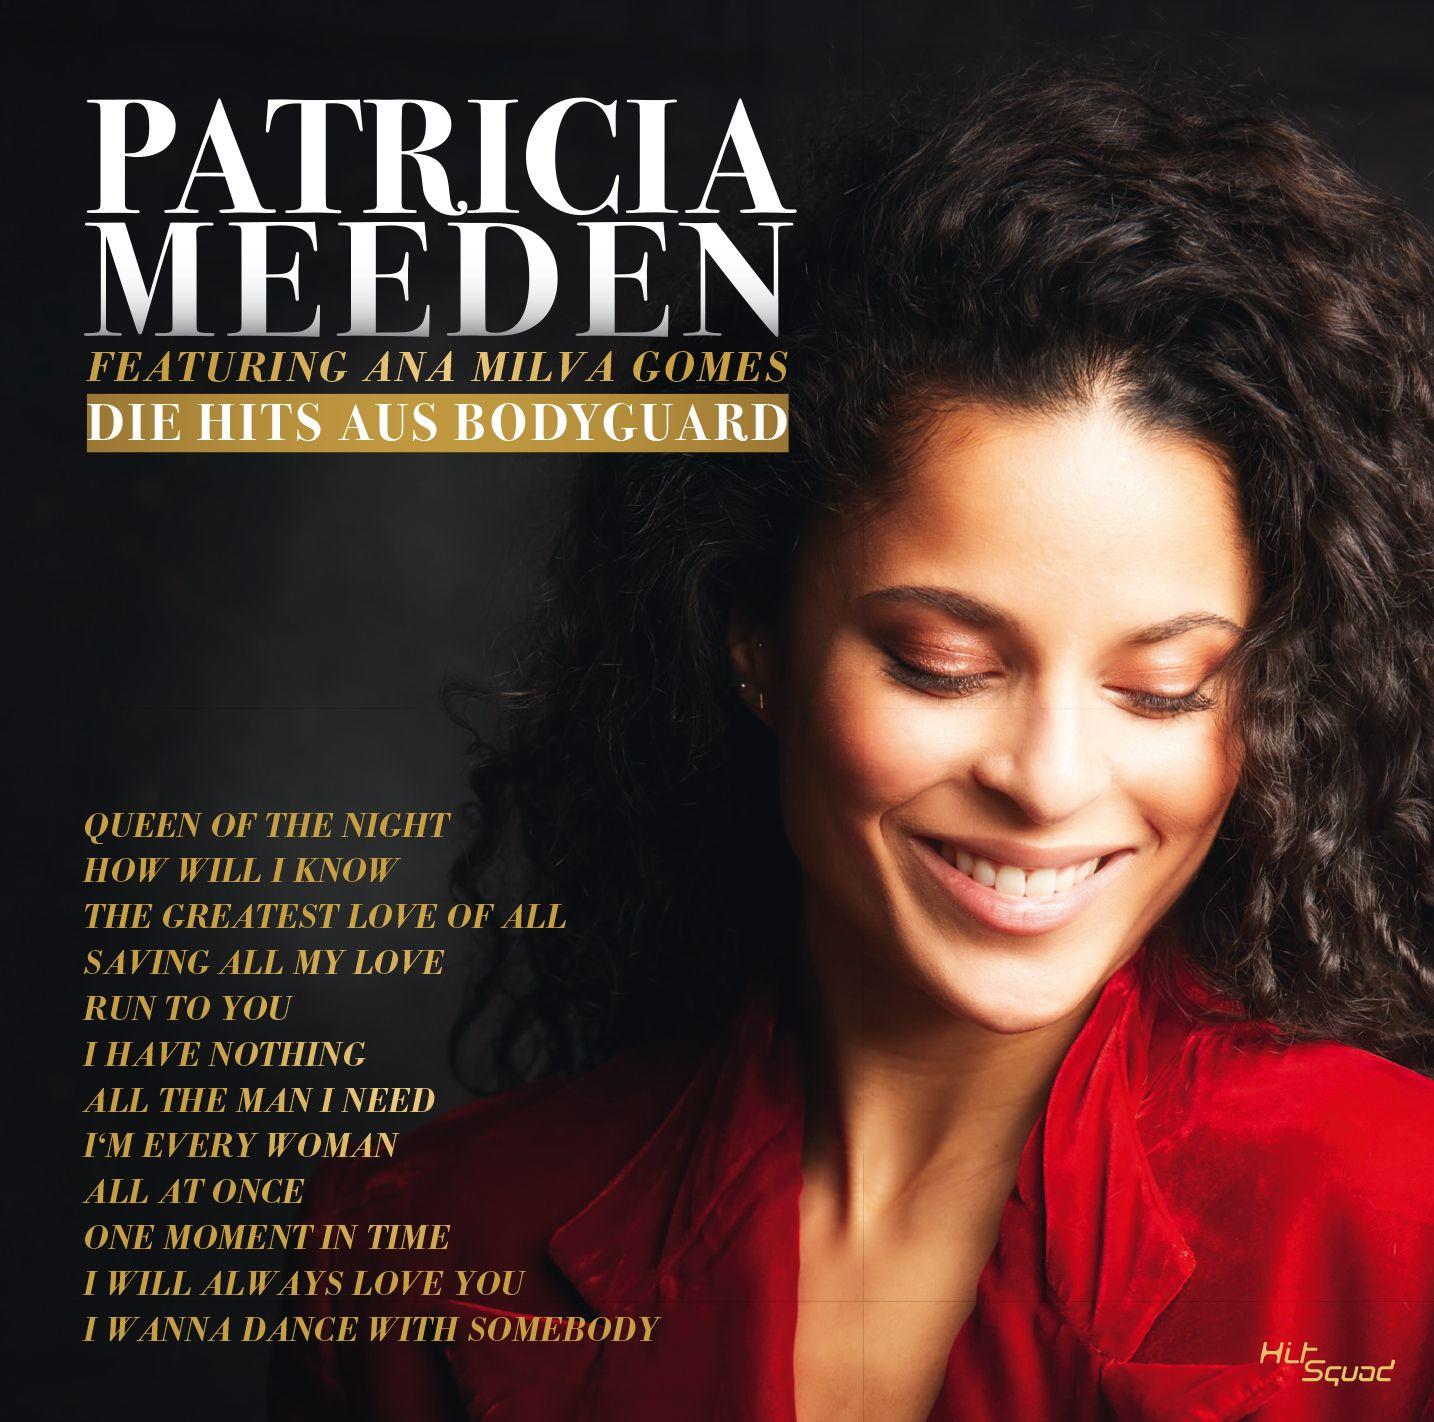 Patricia - (CD) Milva Bodyguard aus Die Hits Meeden, - Gomes Ana